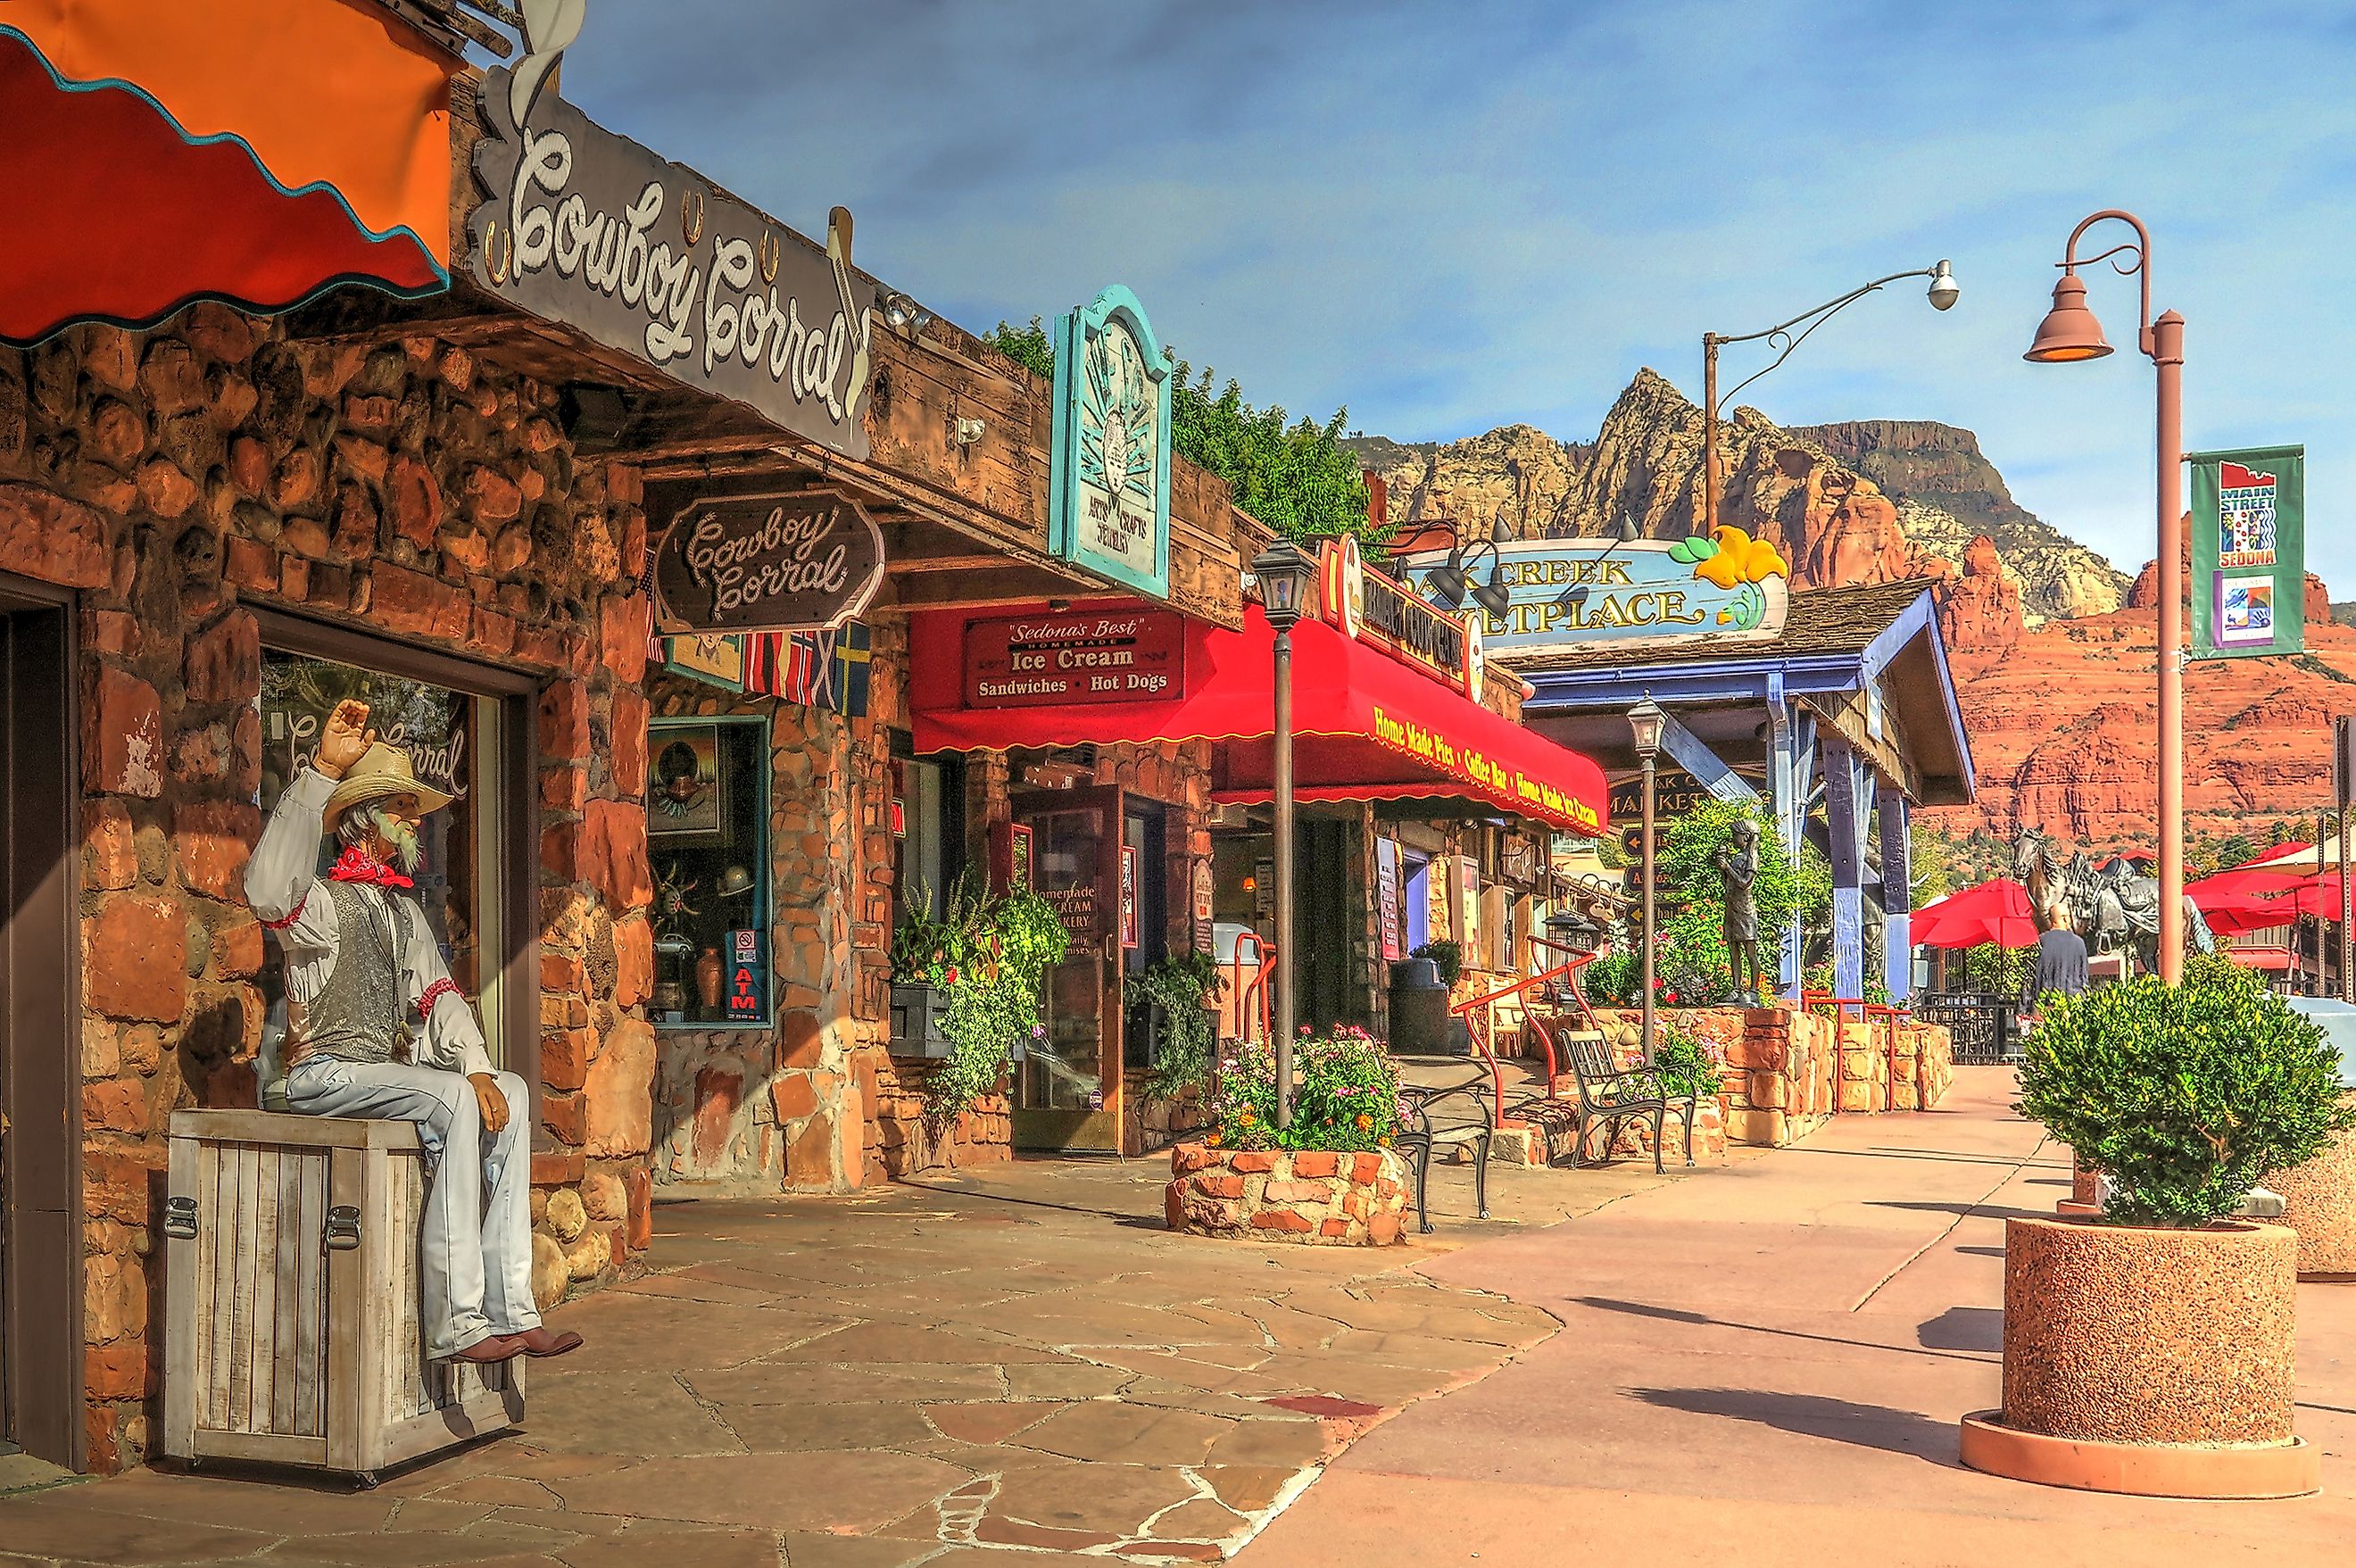 Downtown Tourist Marketplace in Sedona, Arizona. Editorial credit: Lynne Neuman / Shutterstock.com.